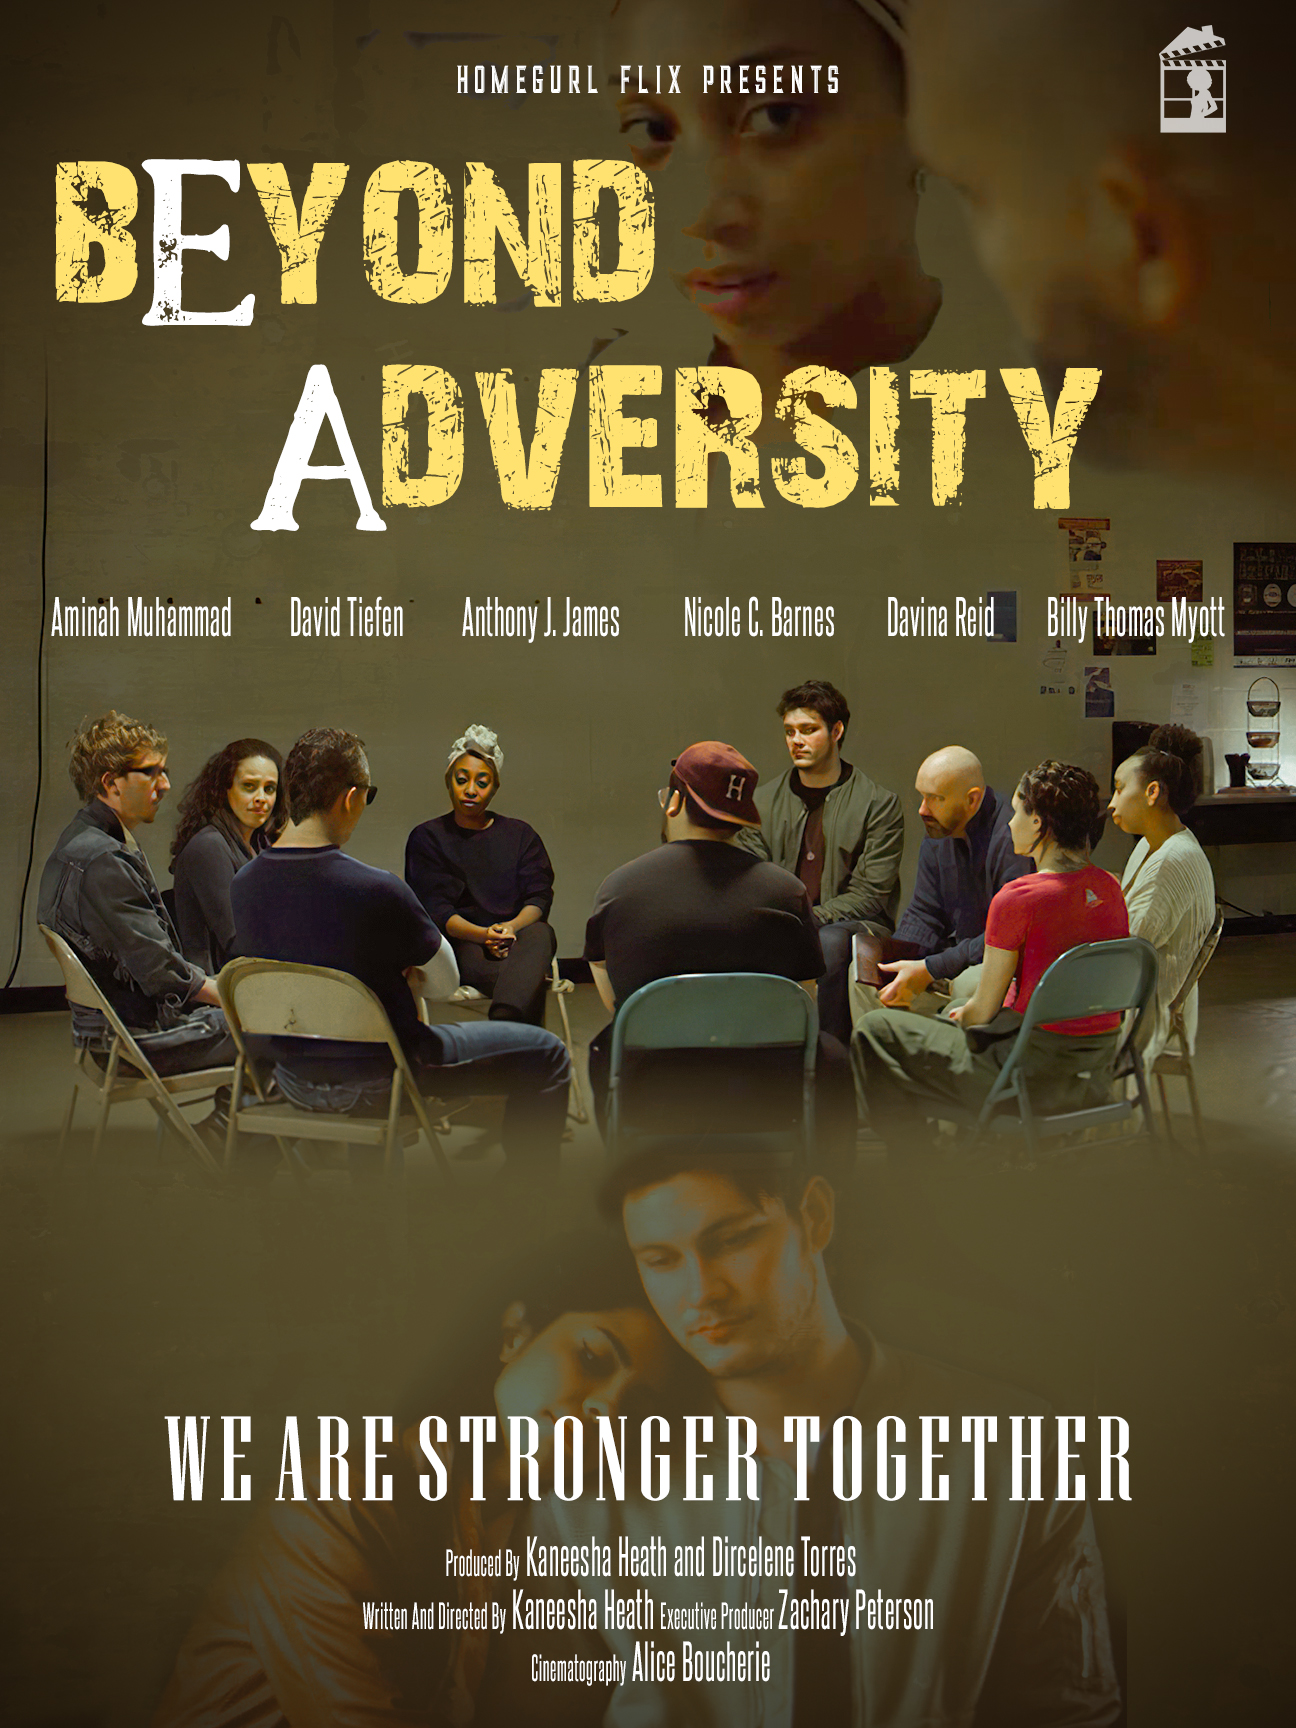 Beyond Adversity